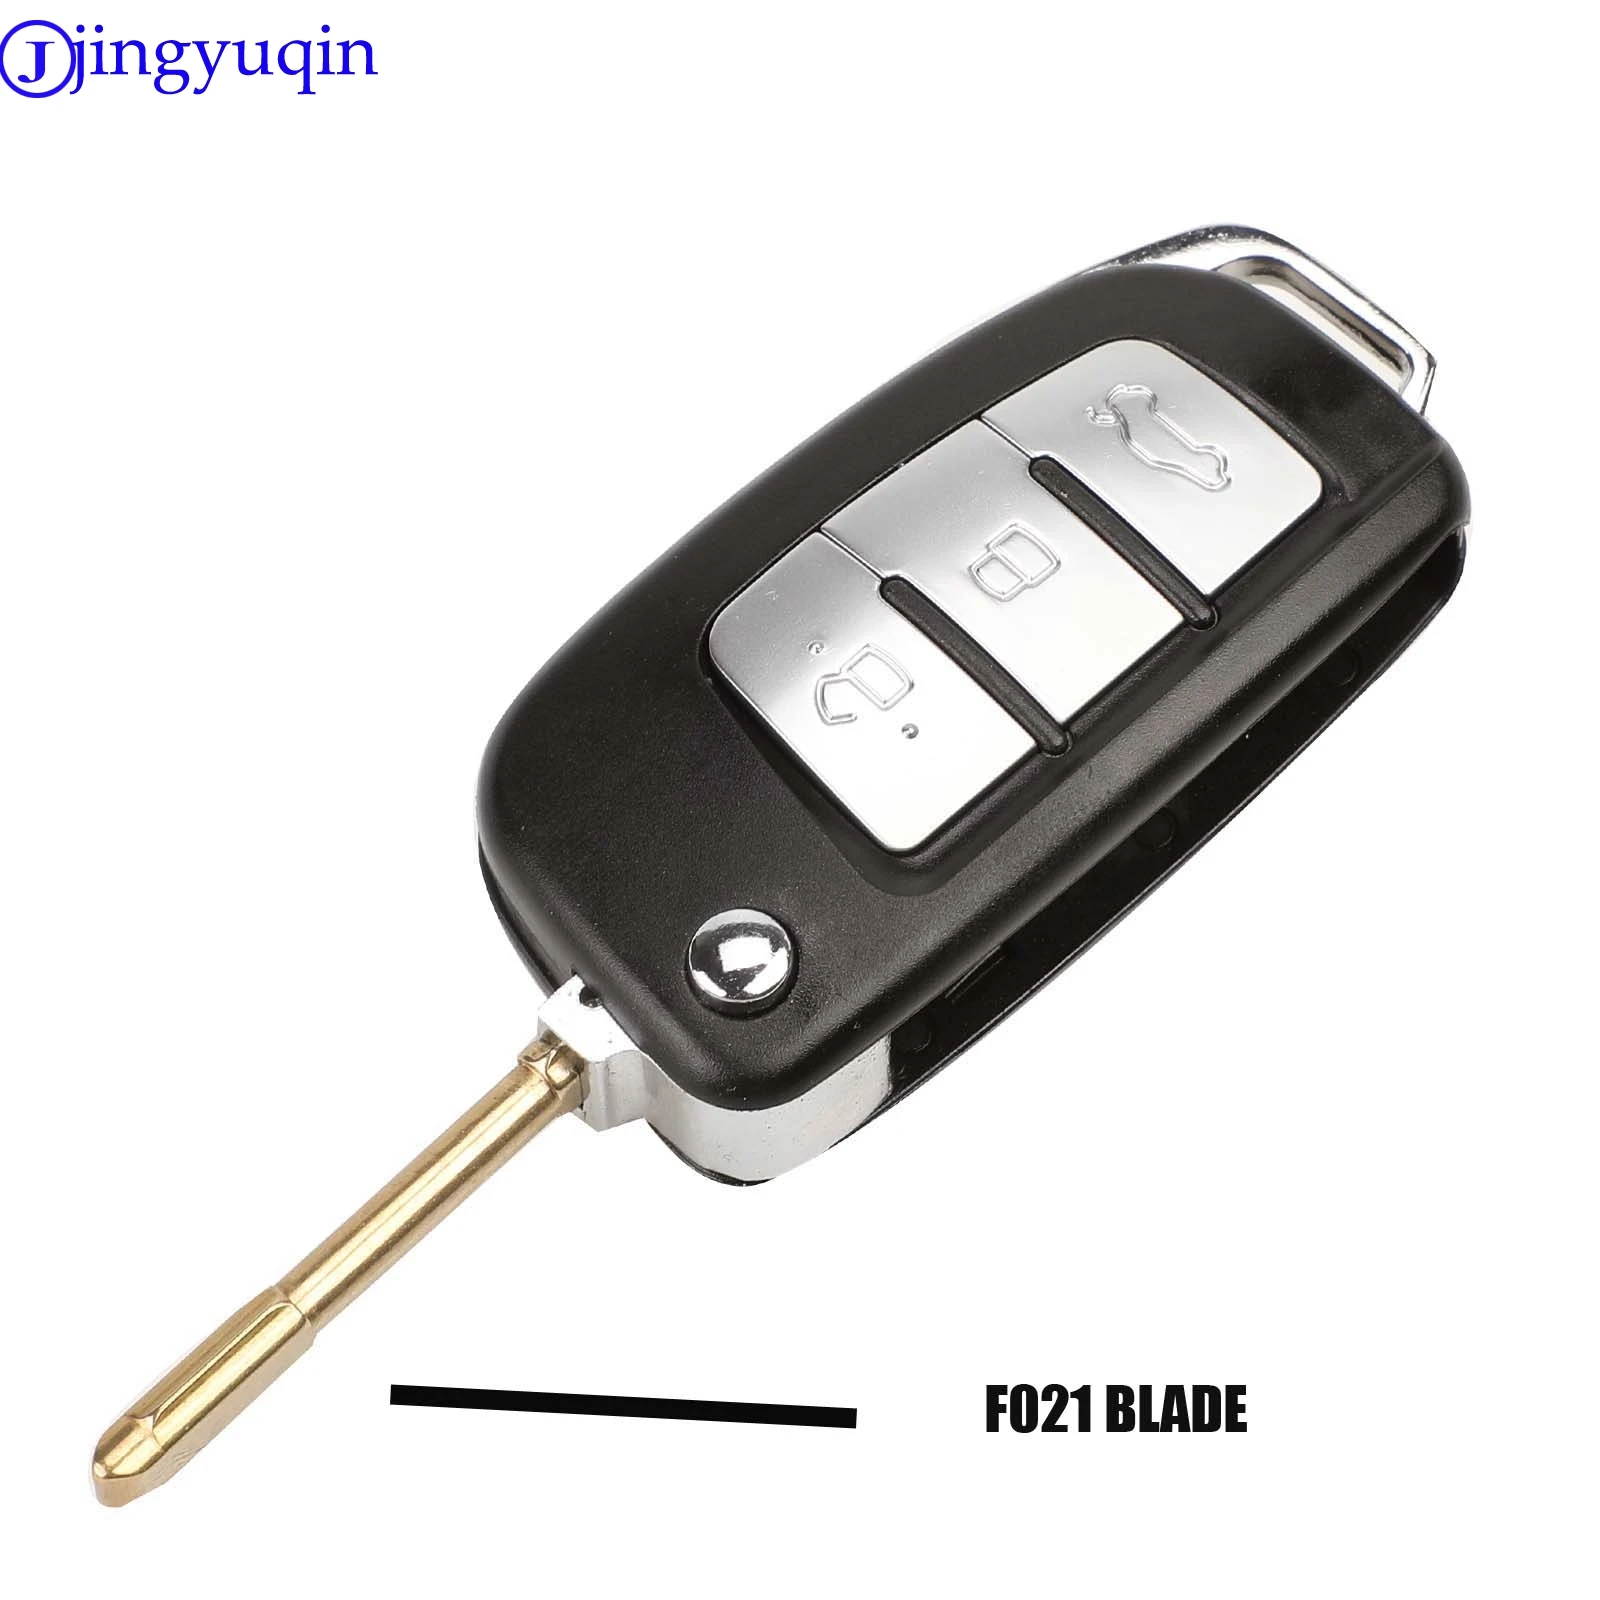 

jingyuqin Folding Key Cover Remote Case For Ford Fiesta Focus 2 Ecosport Kuga Escape C Max Ka 3 Buttons Flip Key Fob FO21